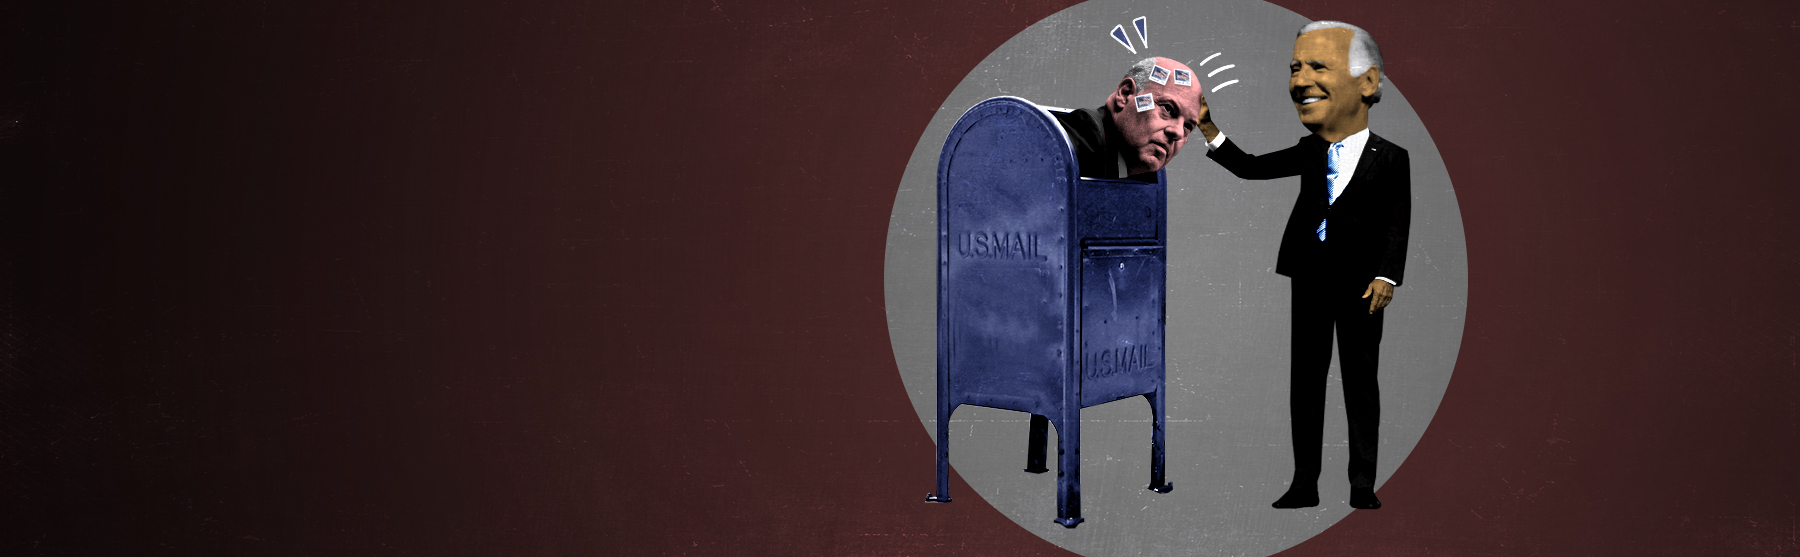 Joe Biden stuffing Louis DeJoy in a mailbox.